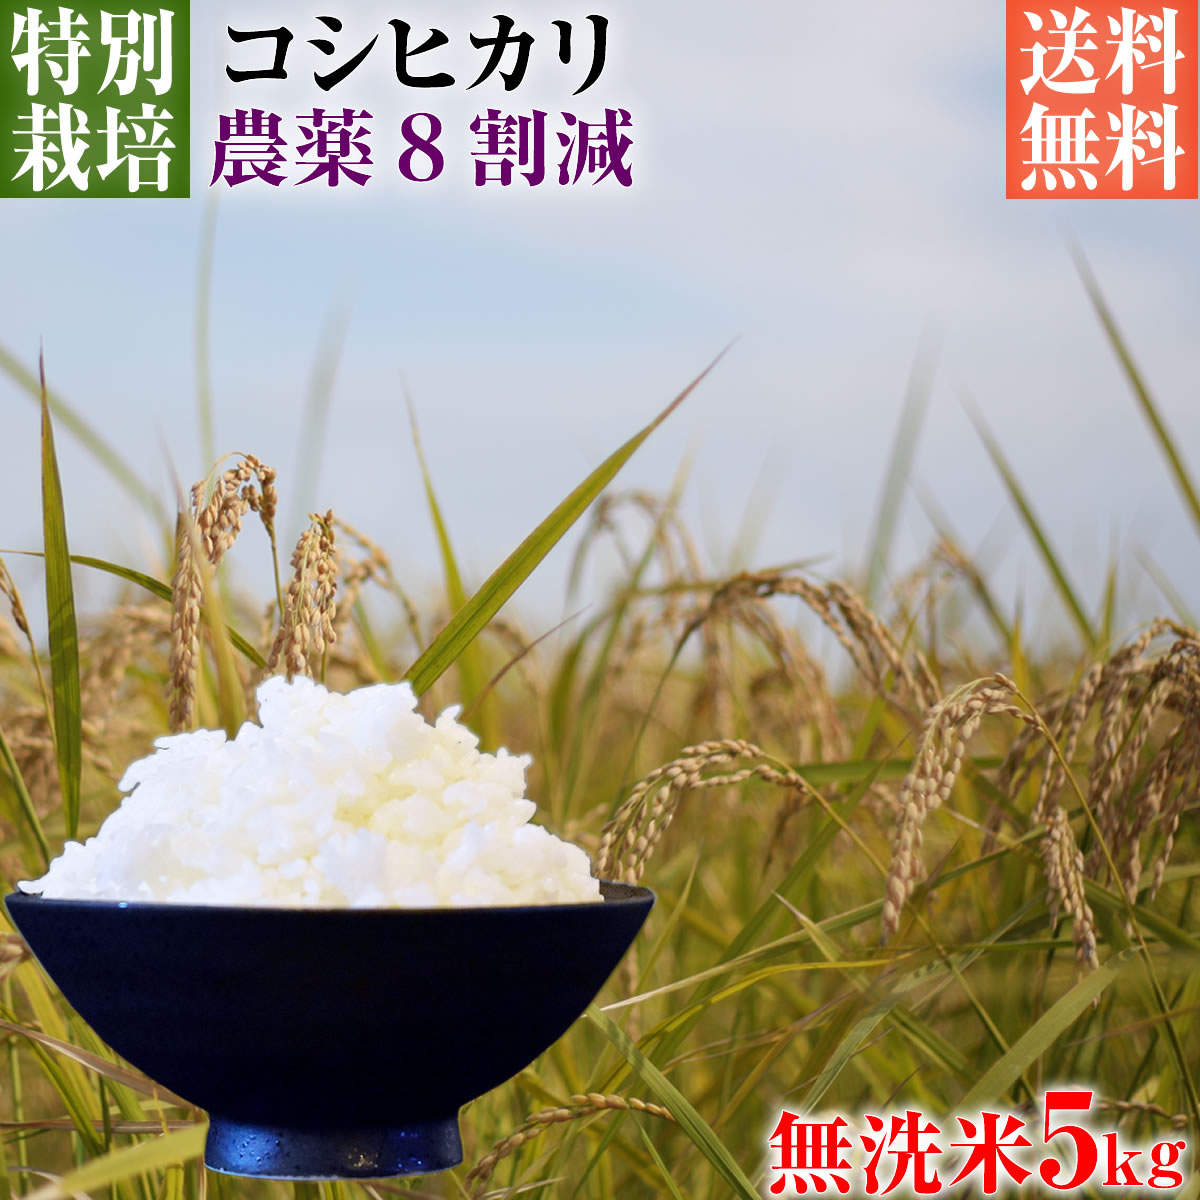 harebare様専用 無農薬コシヒカリ玄米20kg(5kg×4)令和4年産の+spbgp44.ru